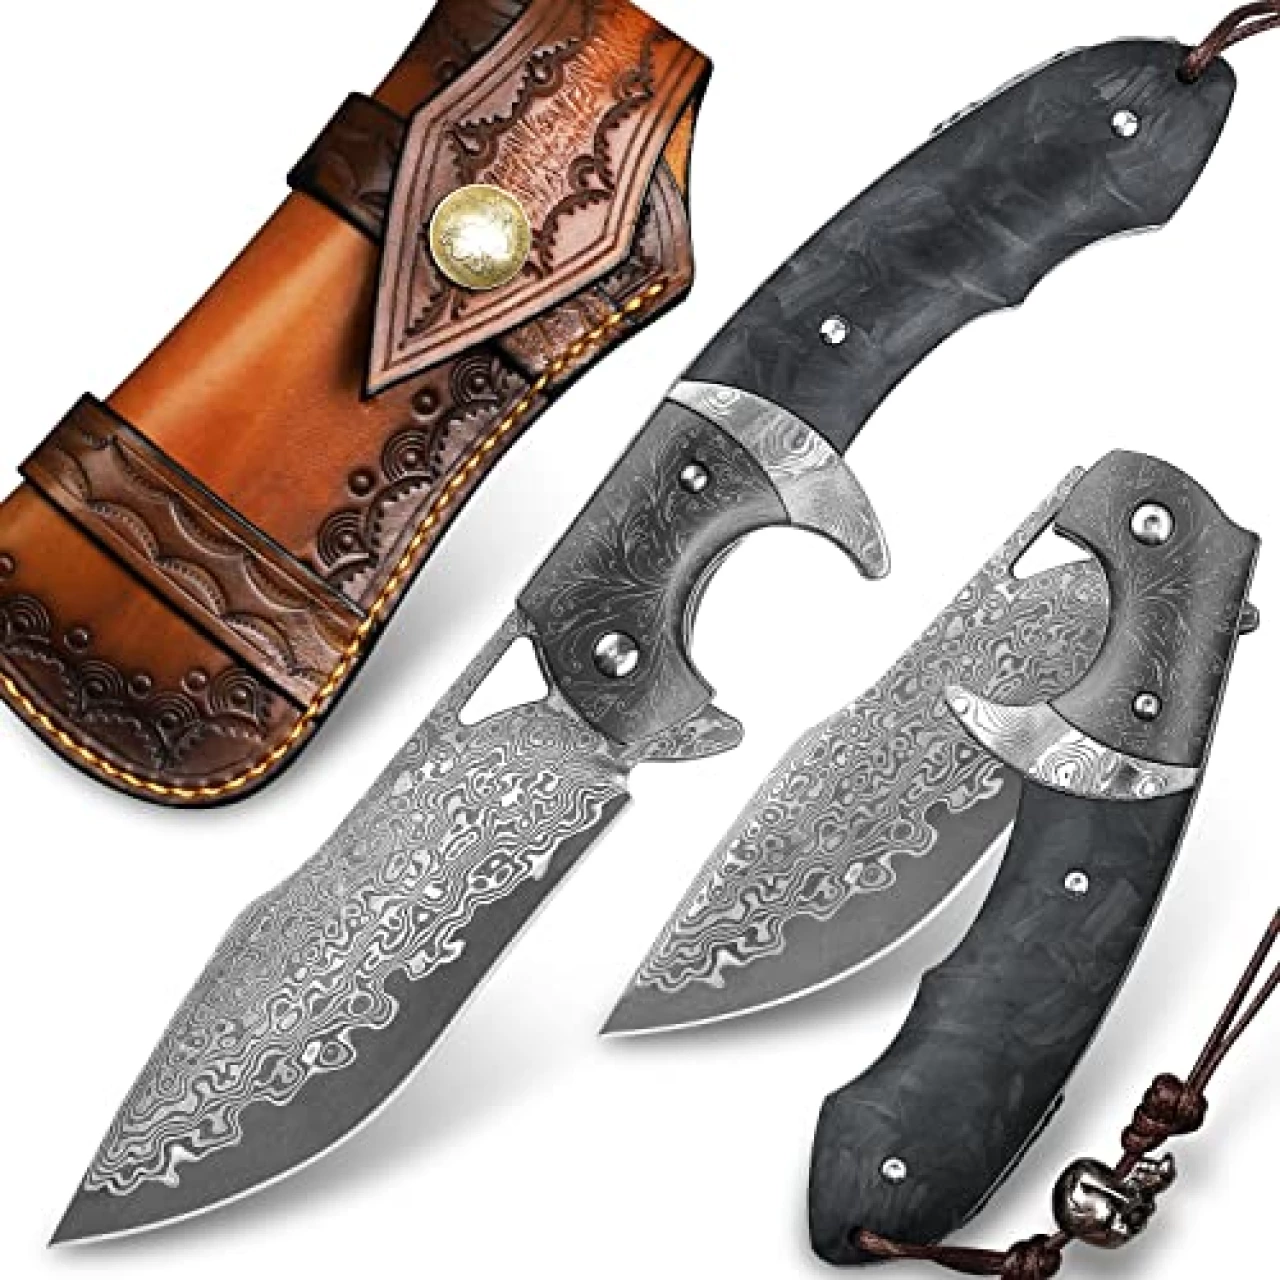 Minowe Handmade Damascus Steel Folding Knife with Leather Case